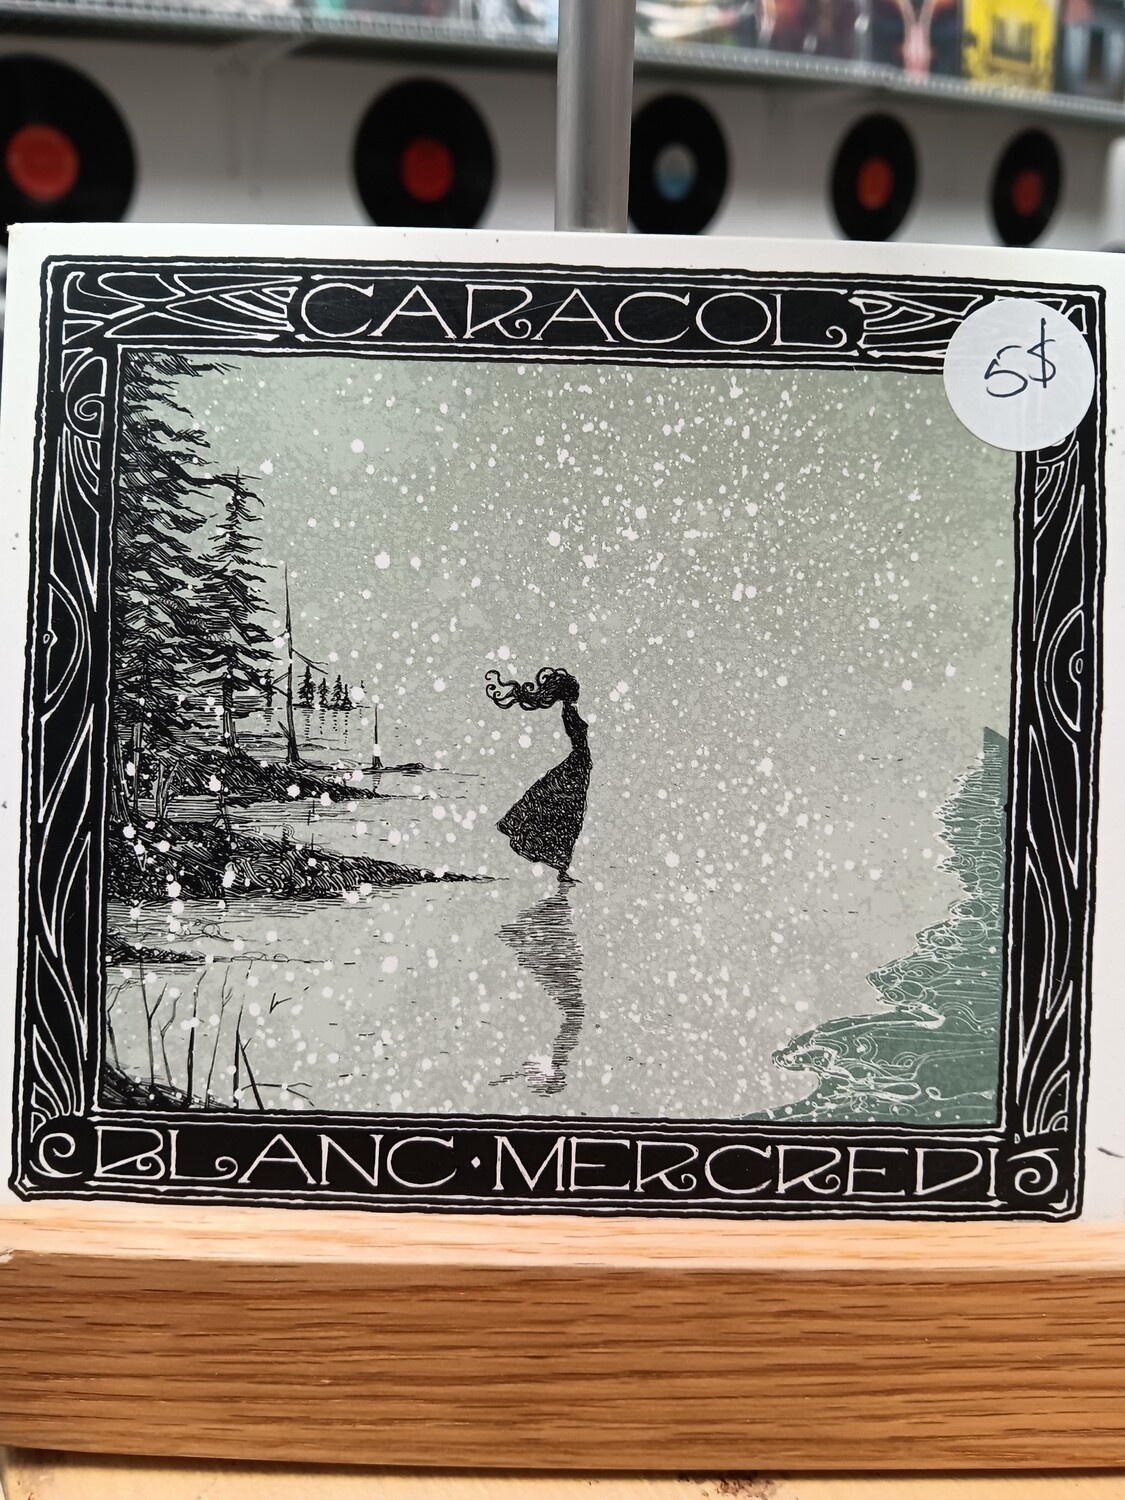 Caracol - Blanc mercredi (CD)